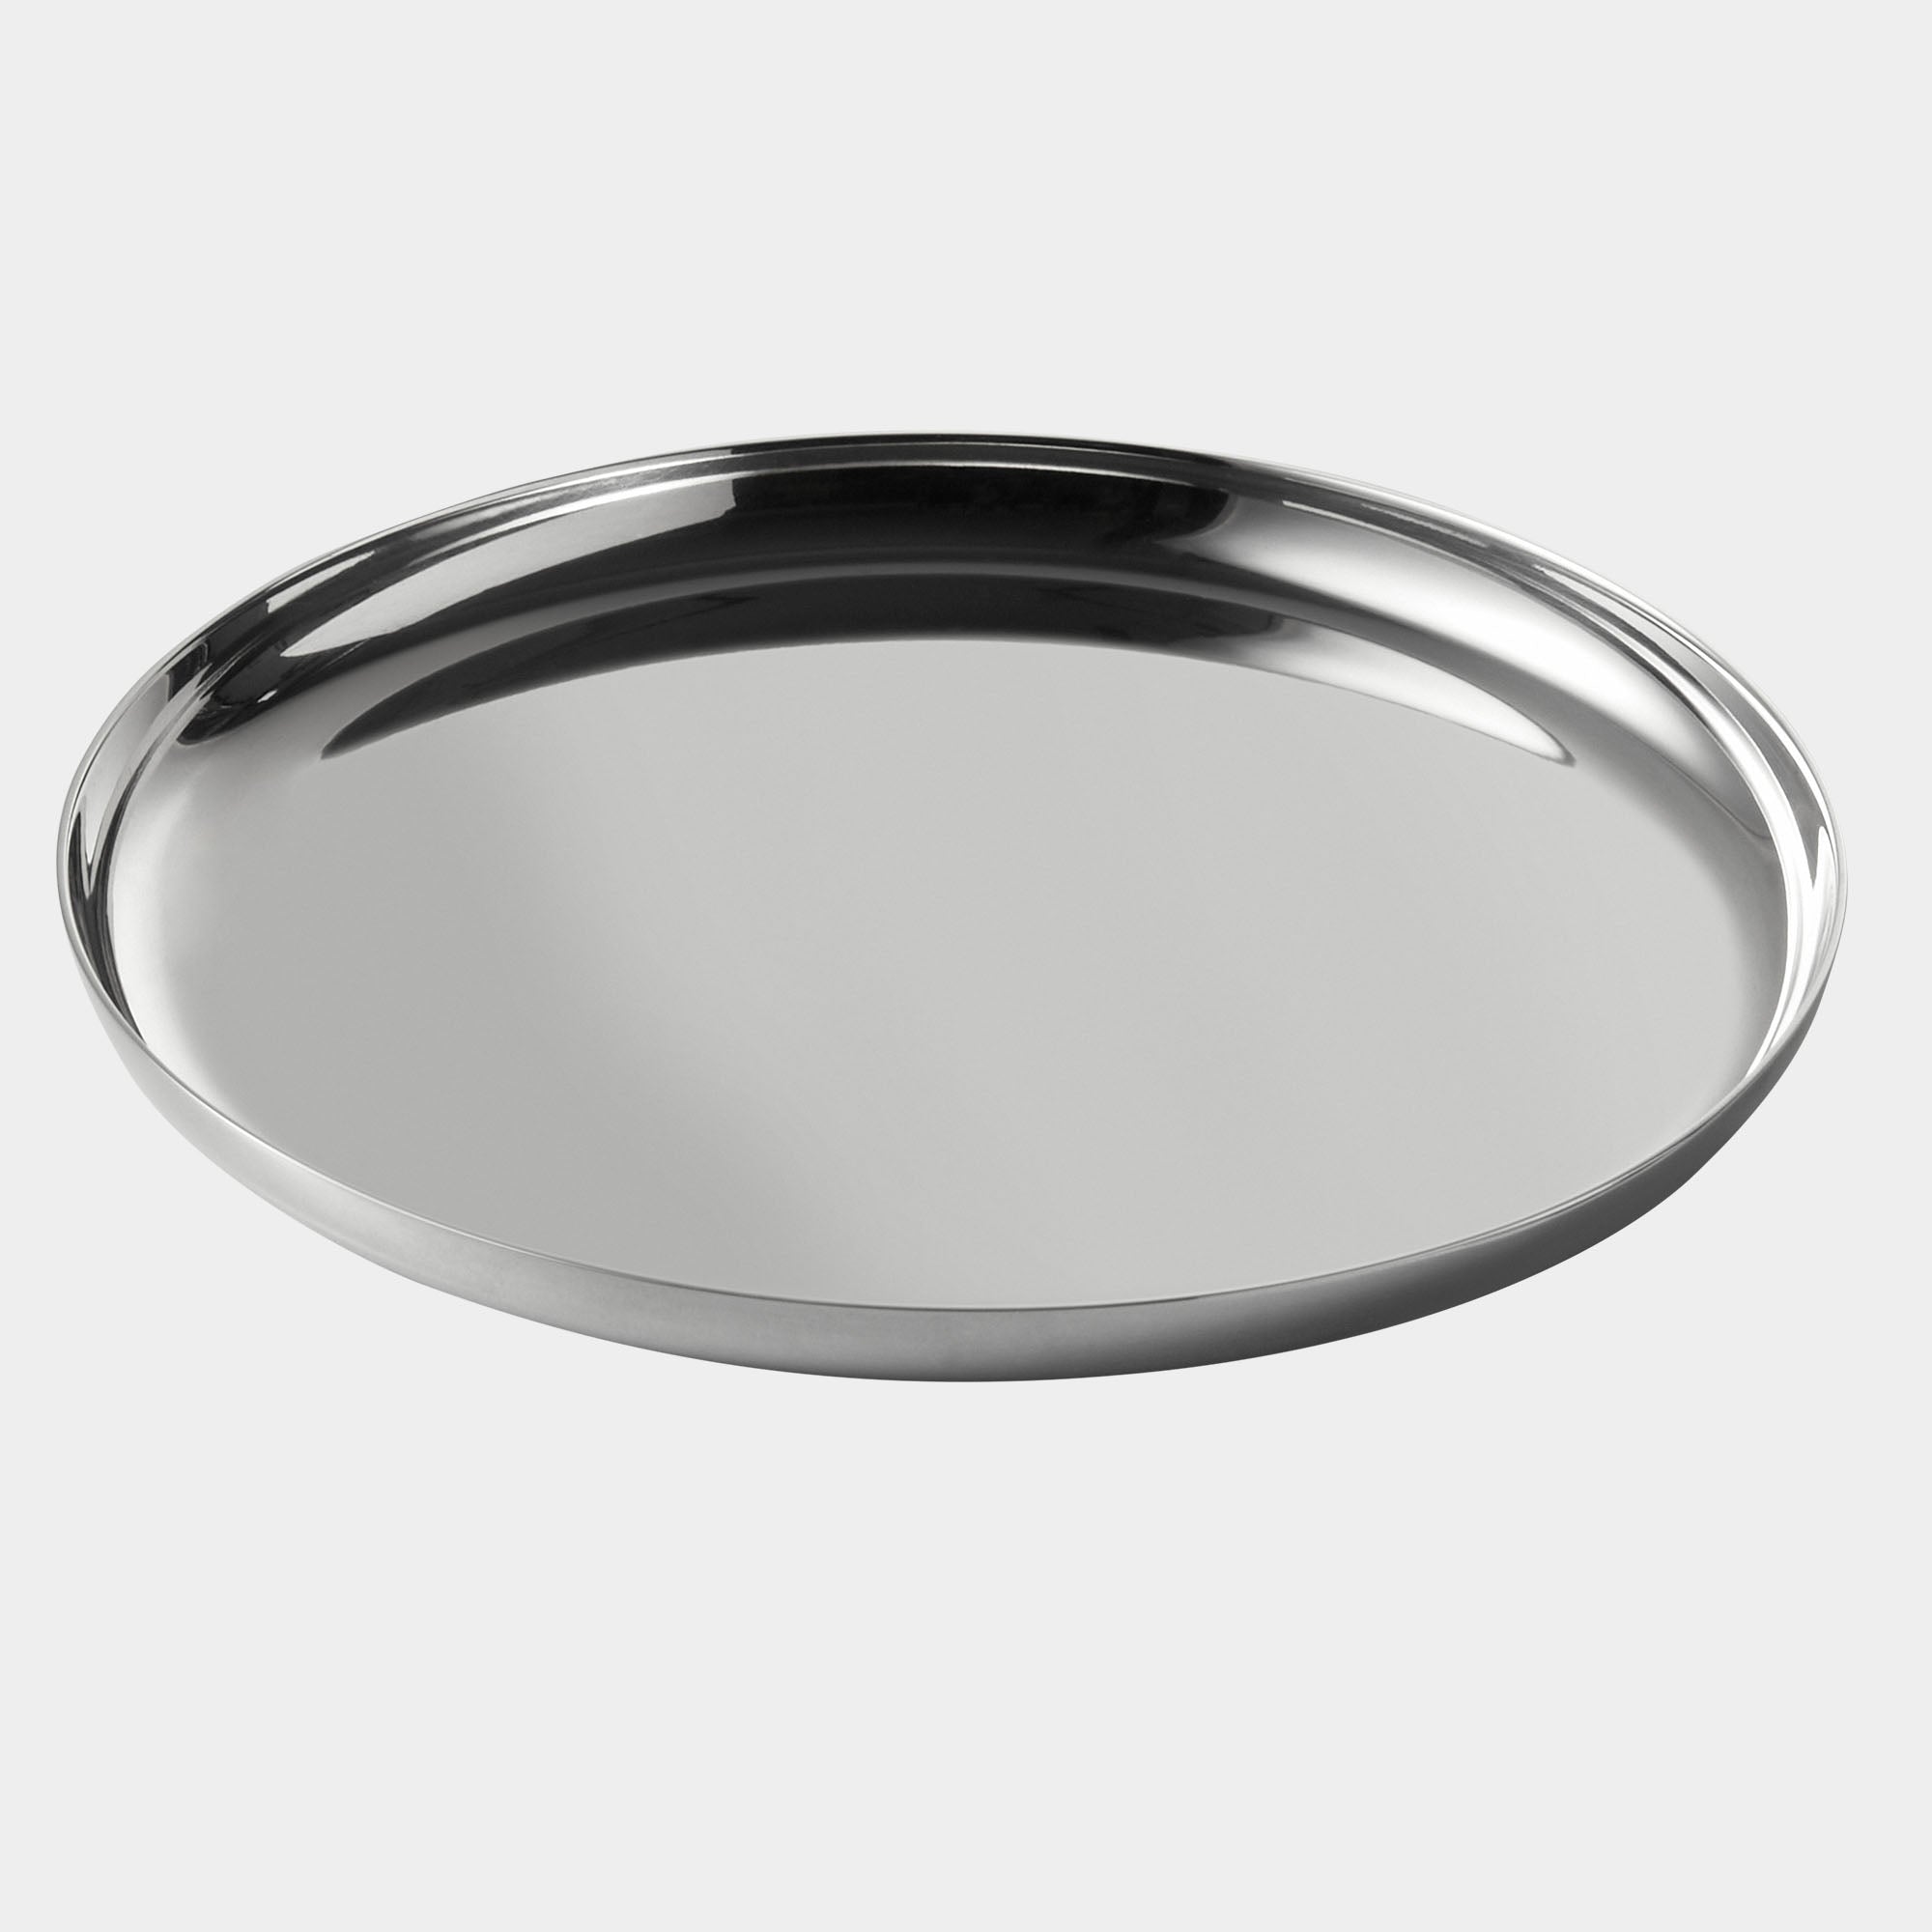 Koch & Bergfeld Gläserteller - 925er Silber, 10cm Durchmesser - Bild 1